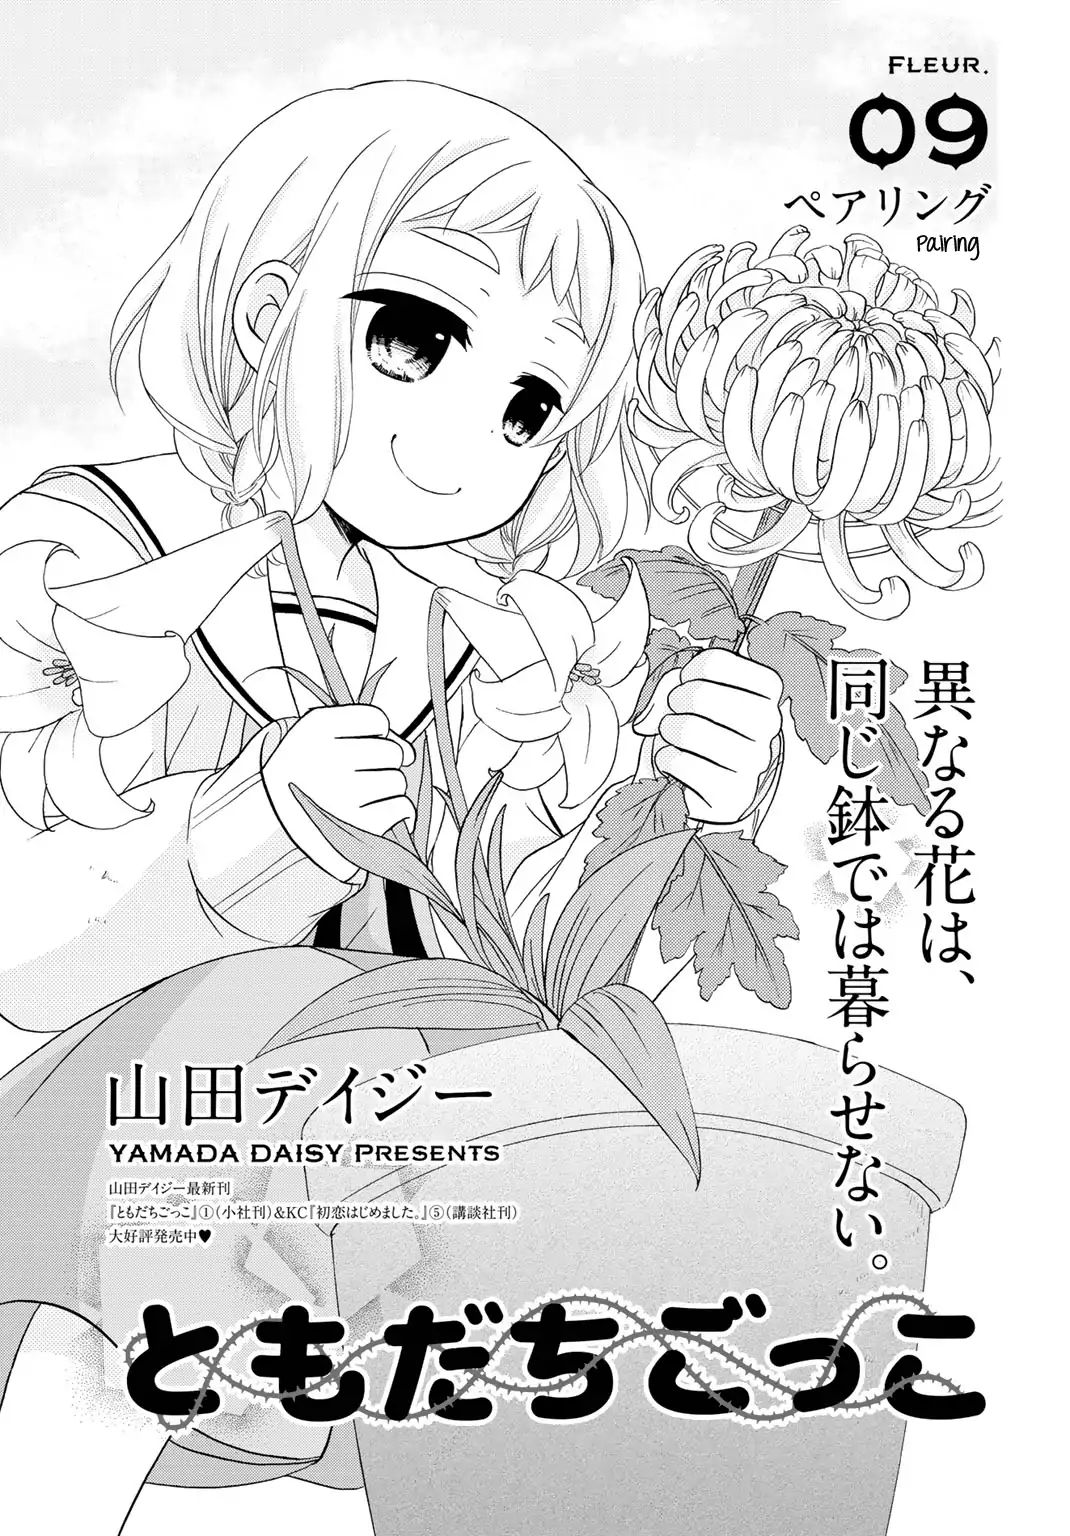 Read Tomodachi Gokko Yamada Daisy Manga English New Chapters Online Free Mangaclash